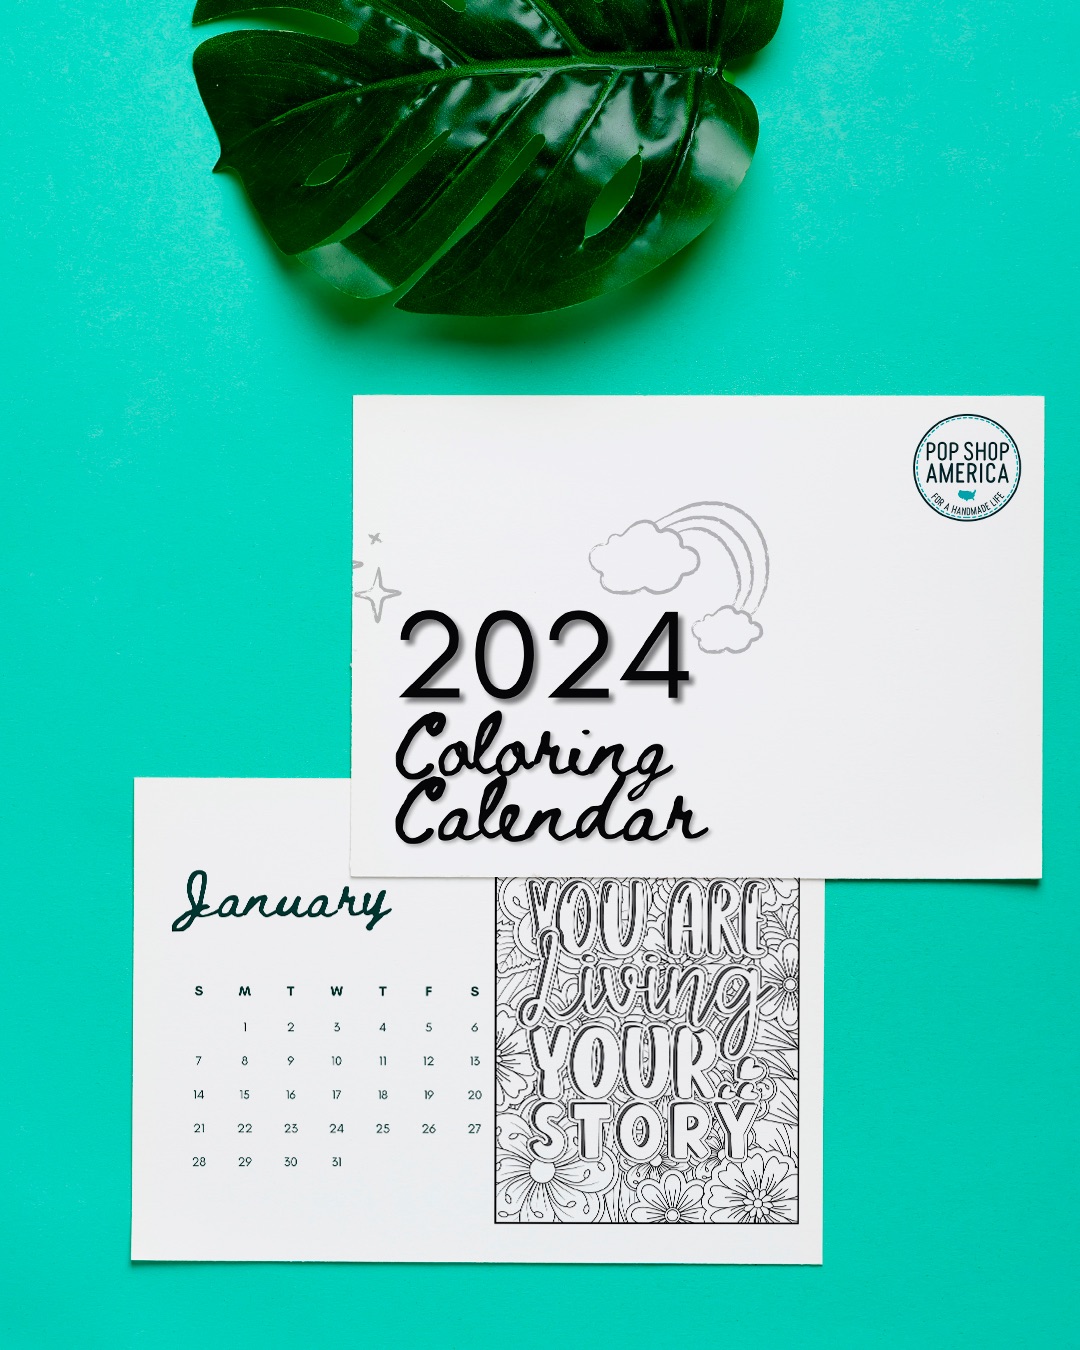 2024-Coloring-Calendar-Preview-Pop-Shop-America